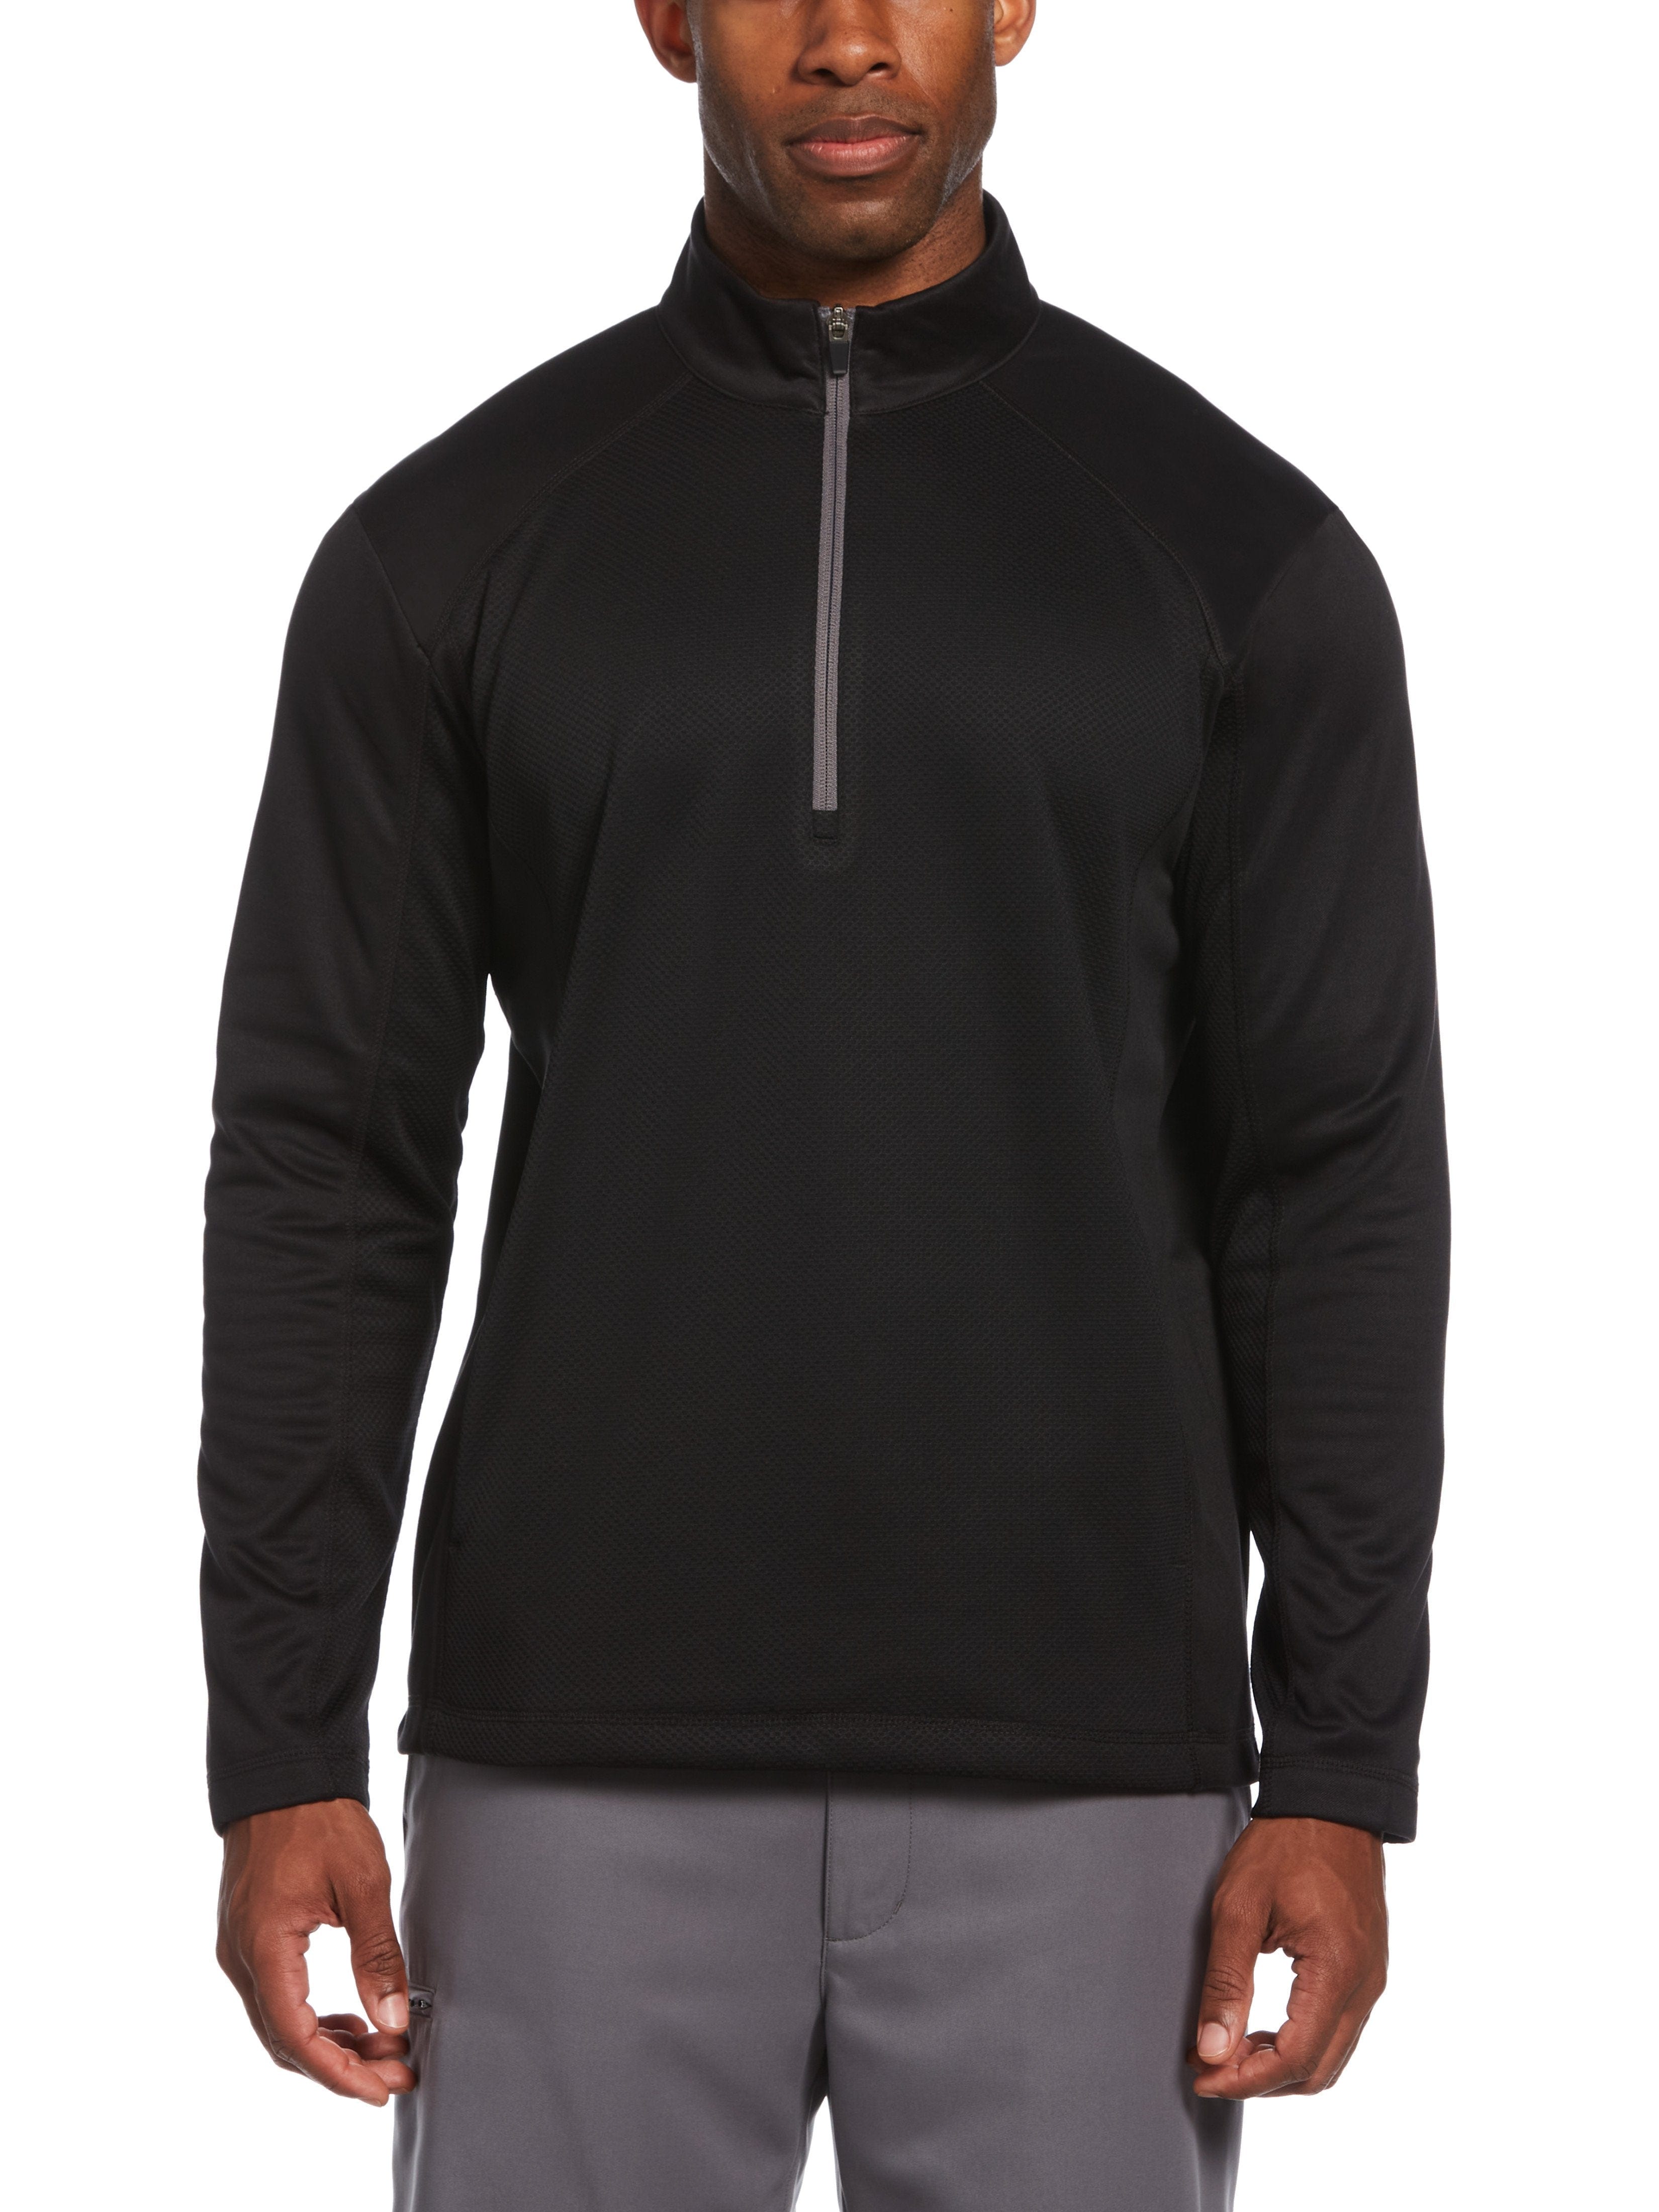 PGA TOUR Apparel Mens Mixed Texture Fleece 1/4 Zip Golf Jacket Top, Size Large, Black, 100% Polyester | Golf Apparel Shop